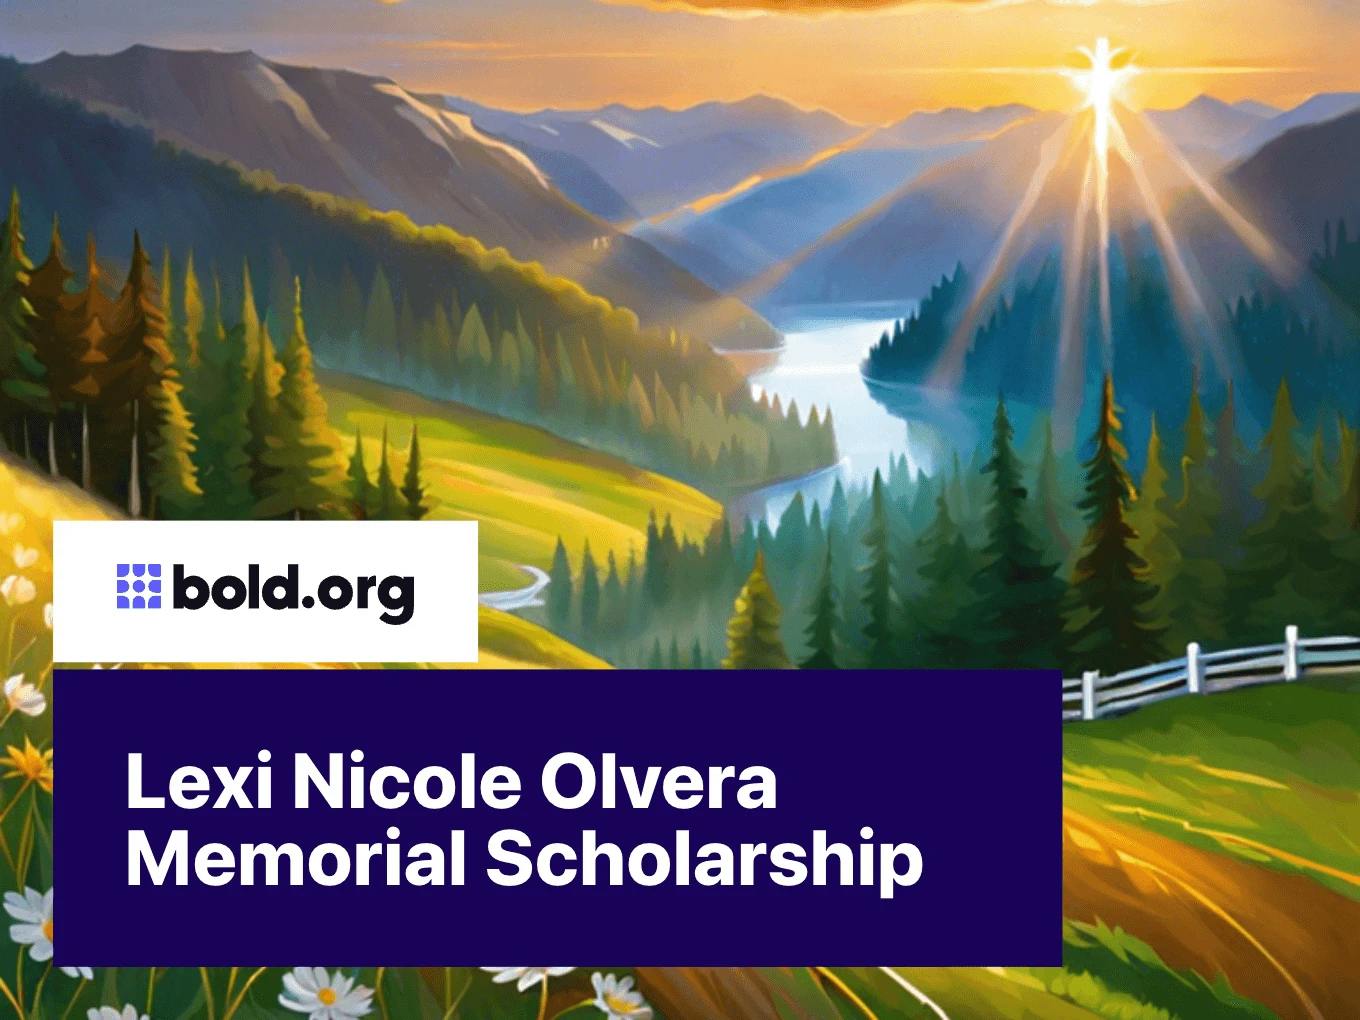 Lexi Nicole Olvera Memorial Scholarship